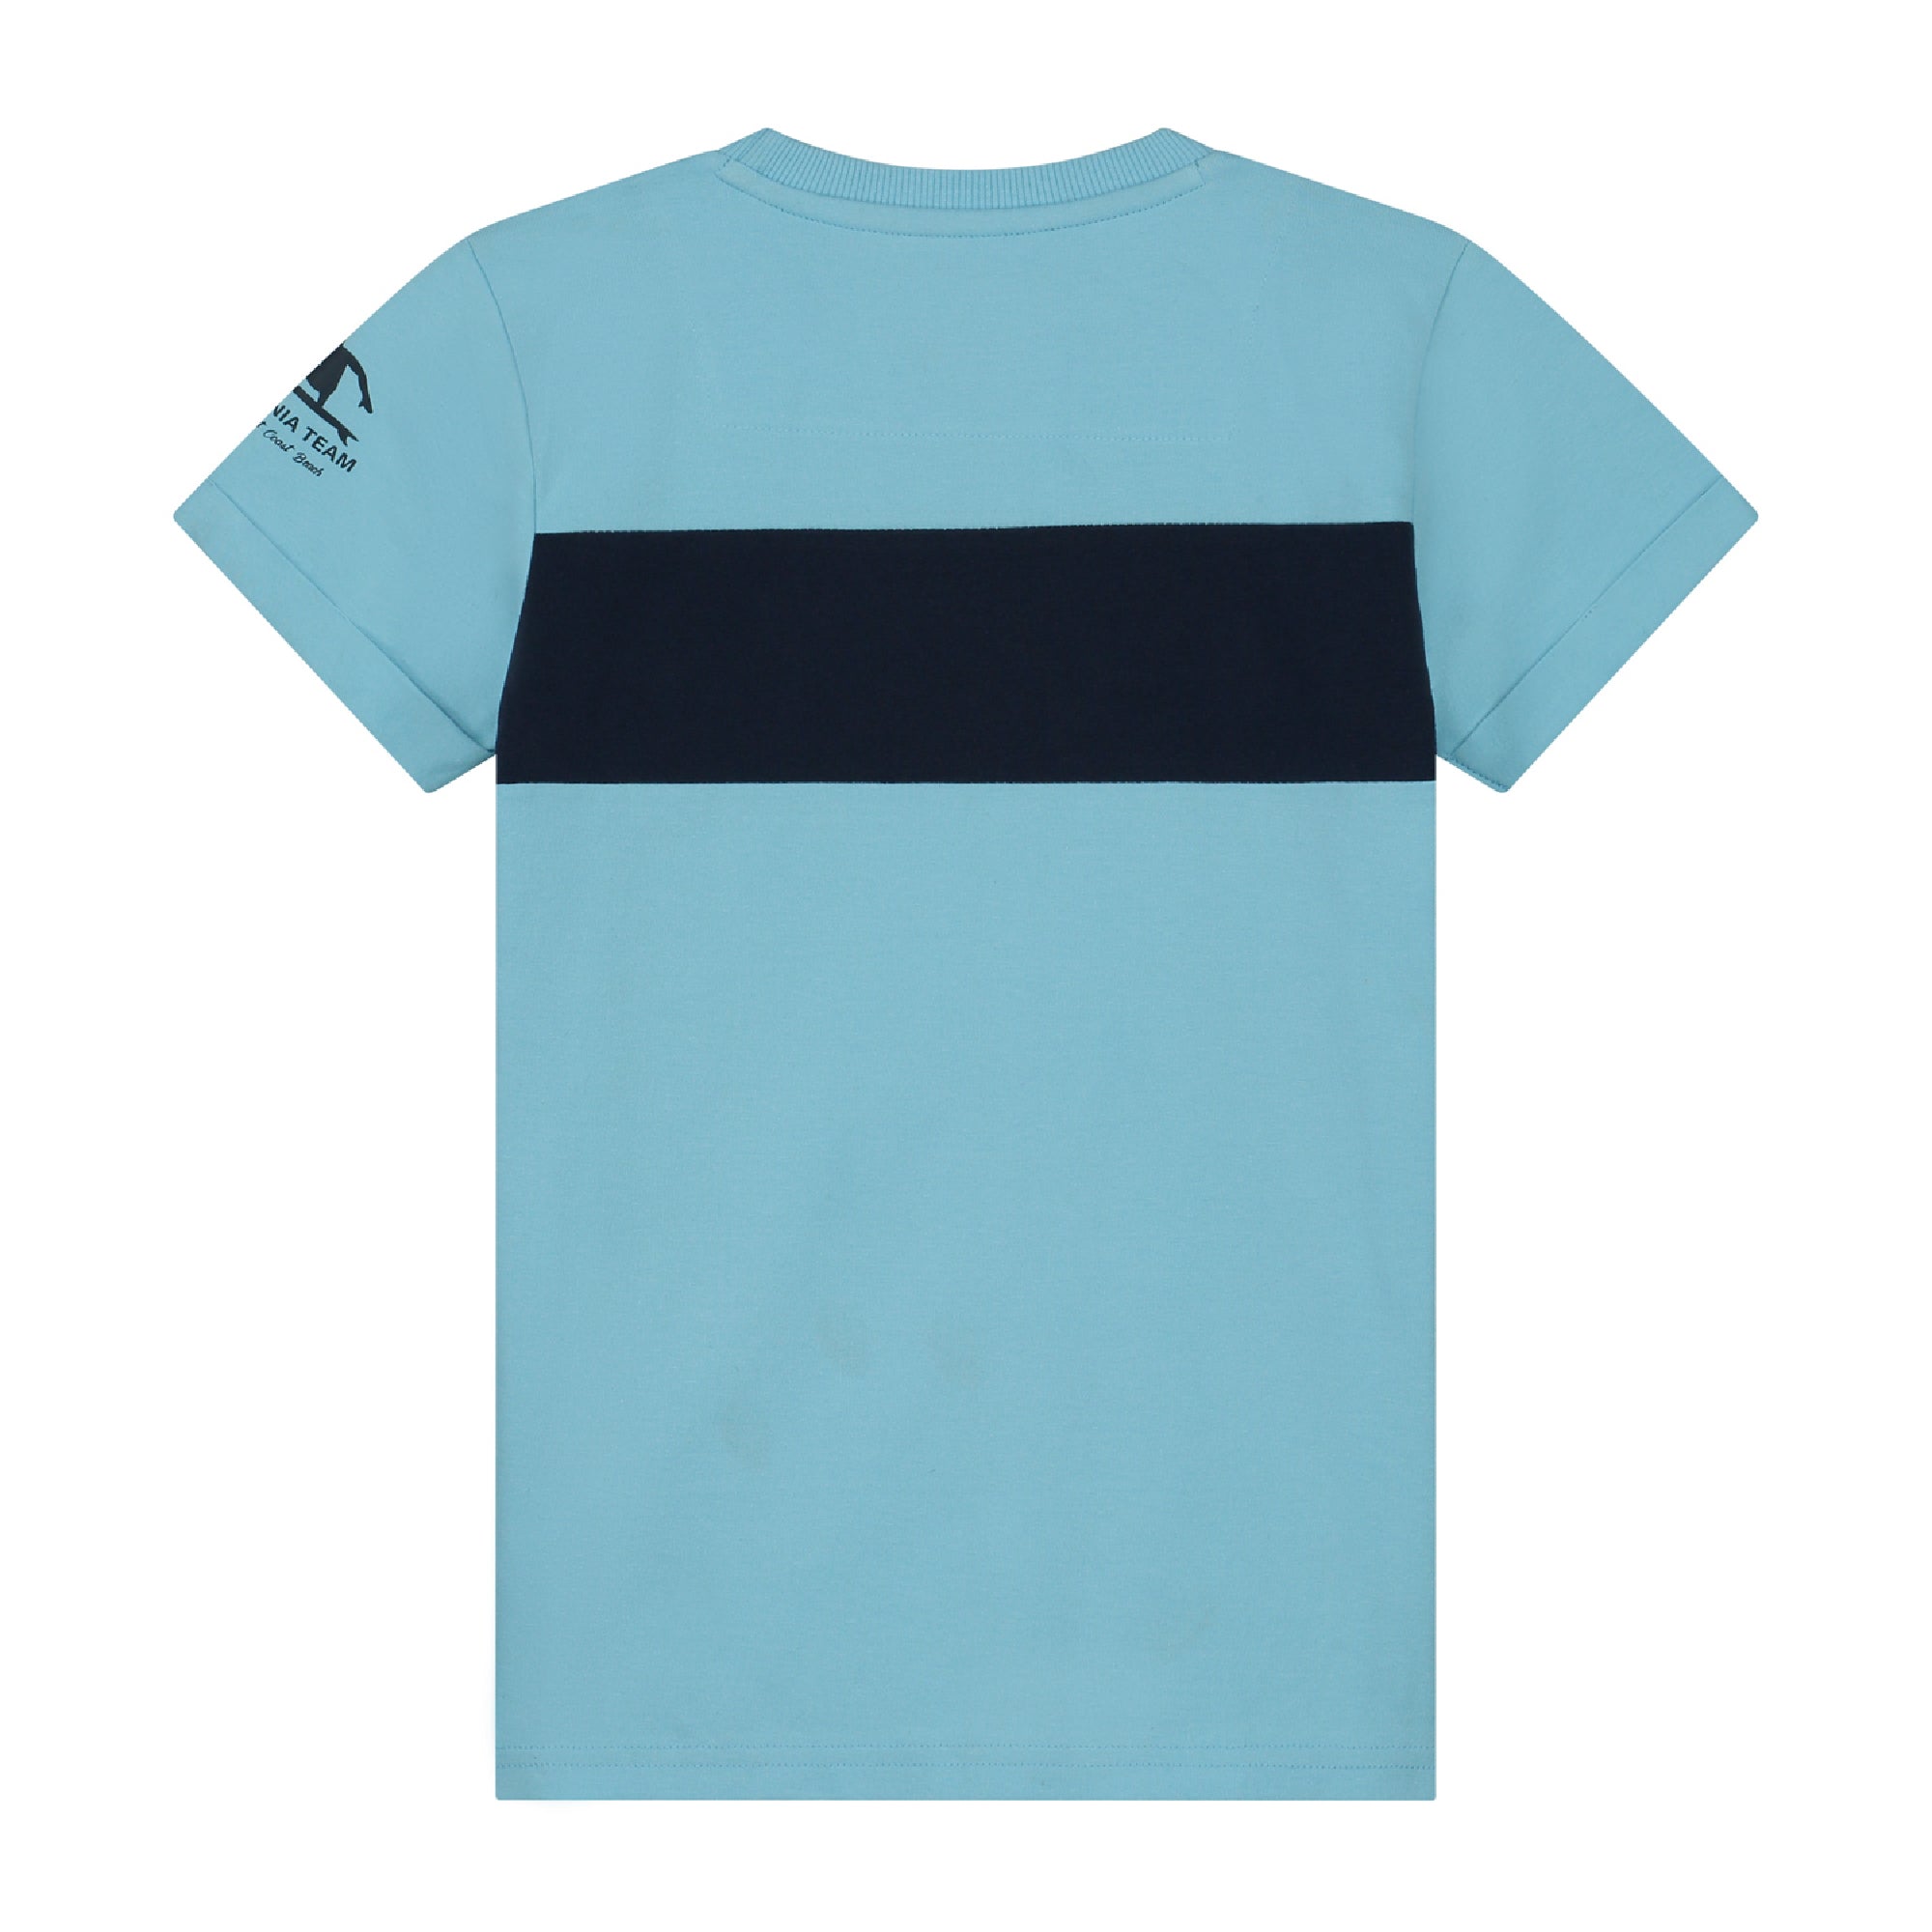 Skurk T-shirt Turf Sky Blue